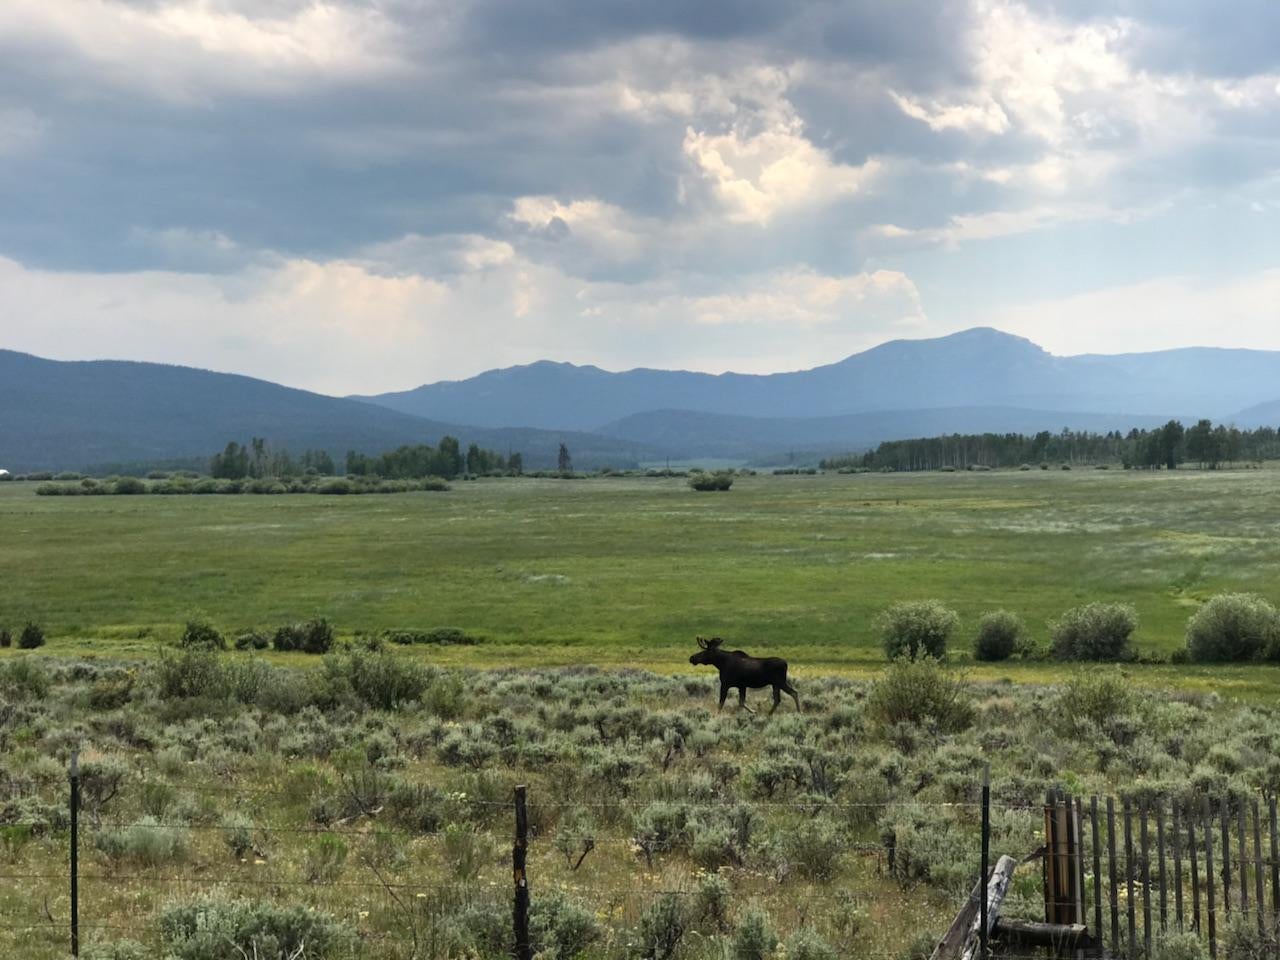 Moose sighting on highway 125, CO